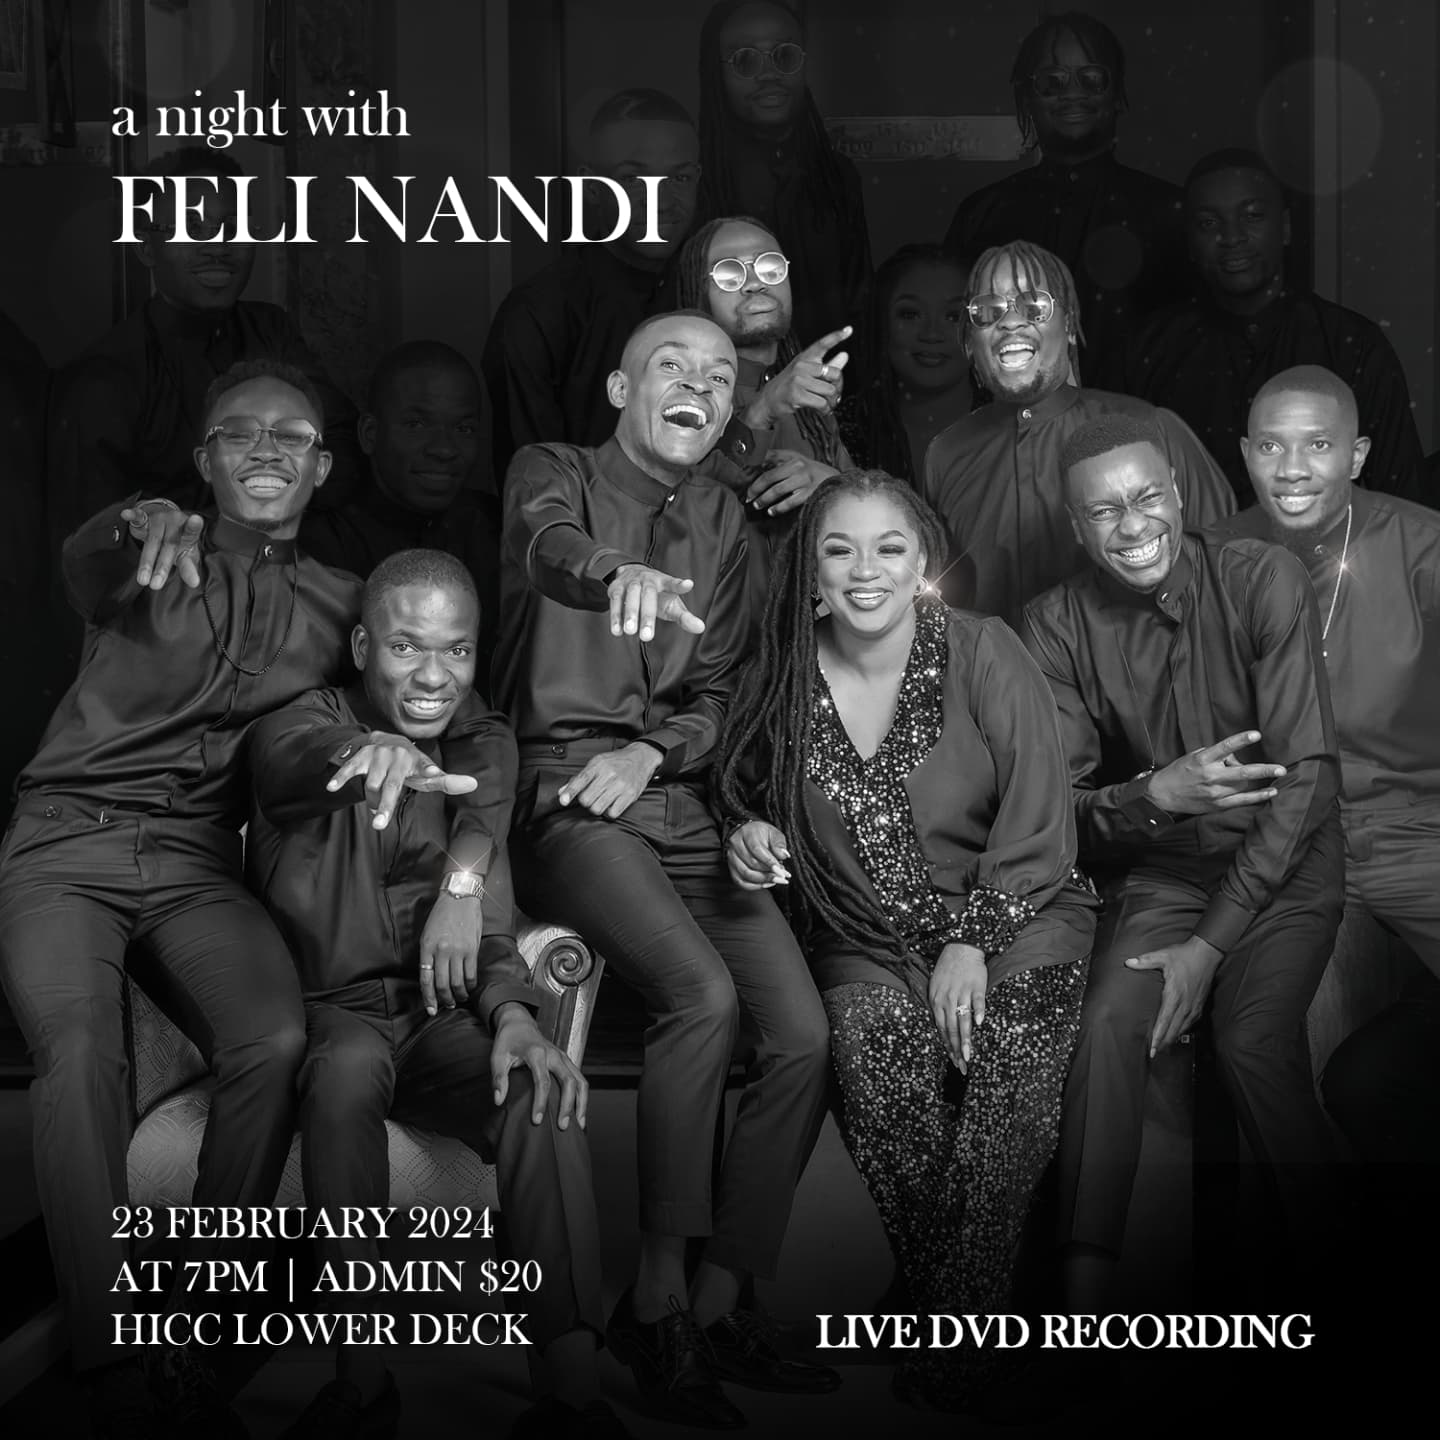 A night with Feli Nandi